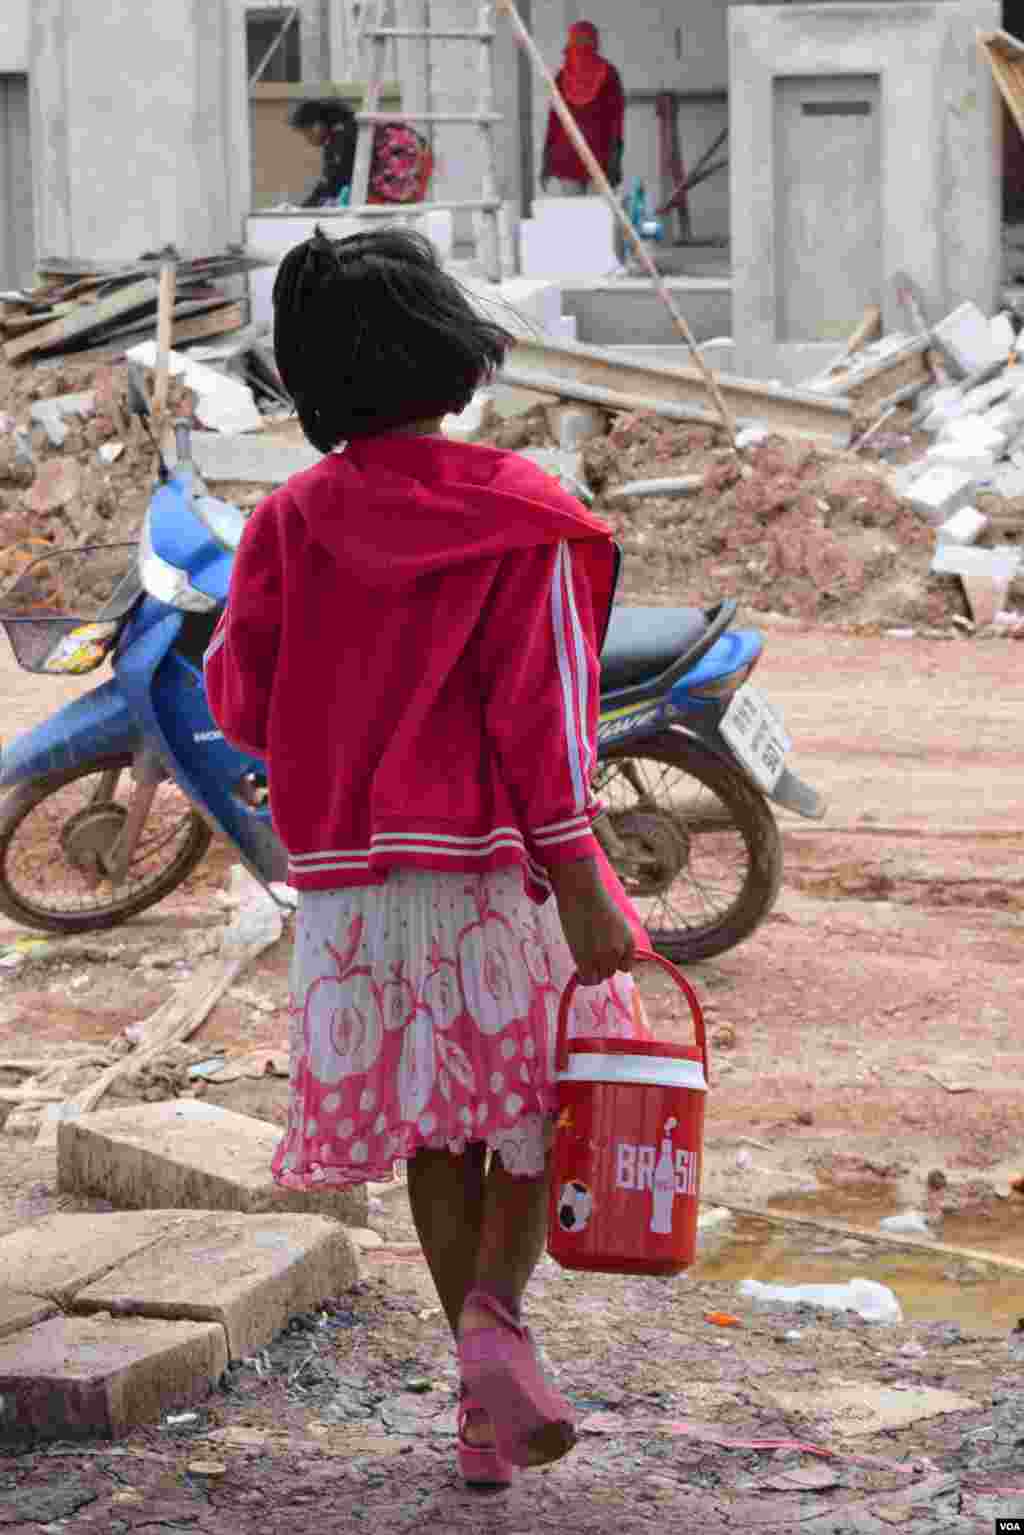 A girl goes on an errand at a construction site, Bangkok, July 10, 2014. (Rosyla Kalden/VOA)